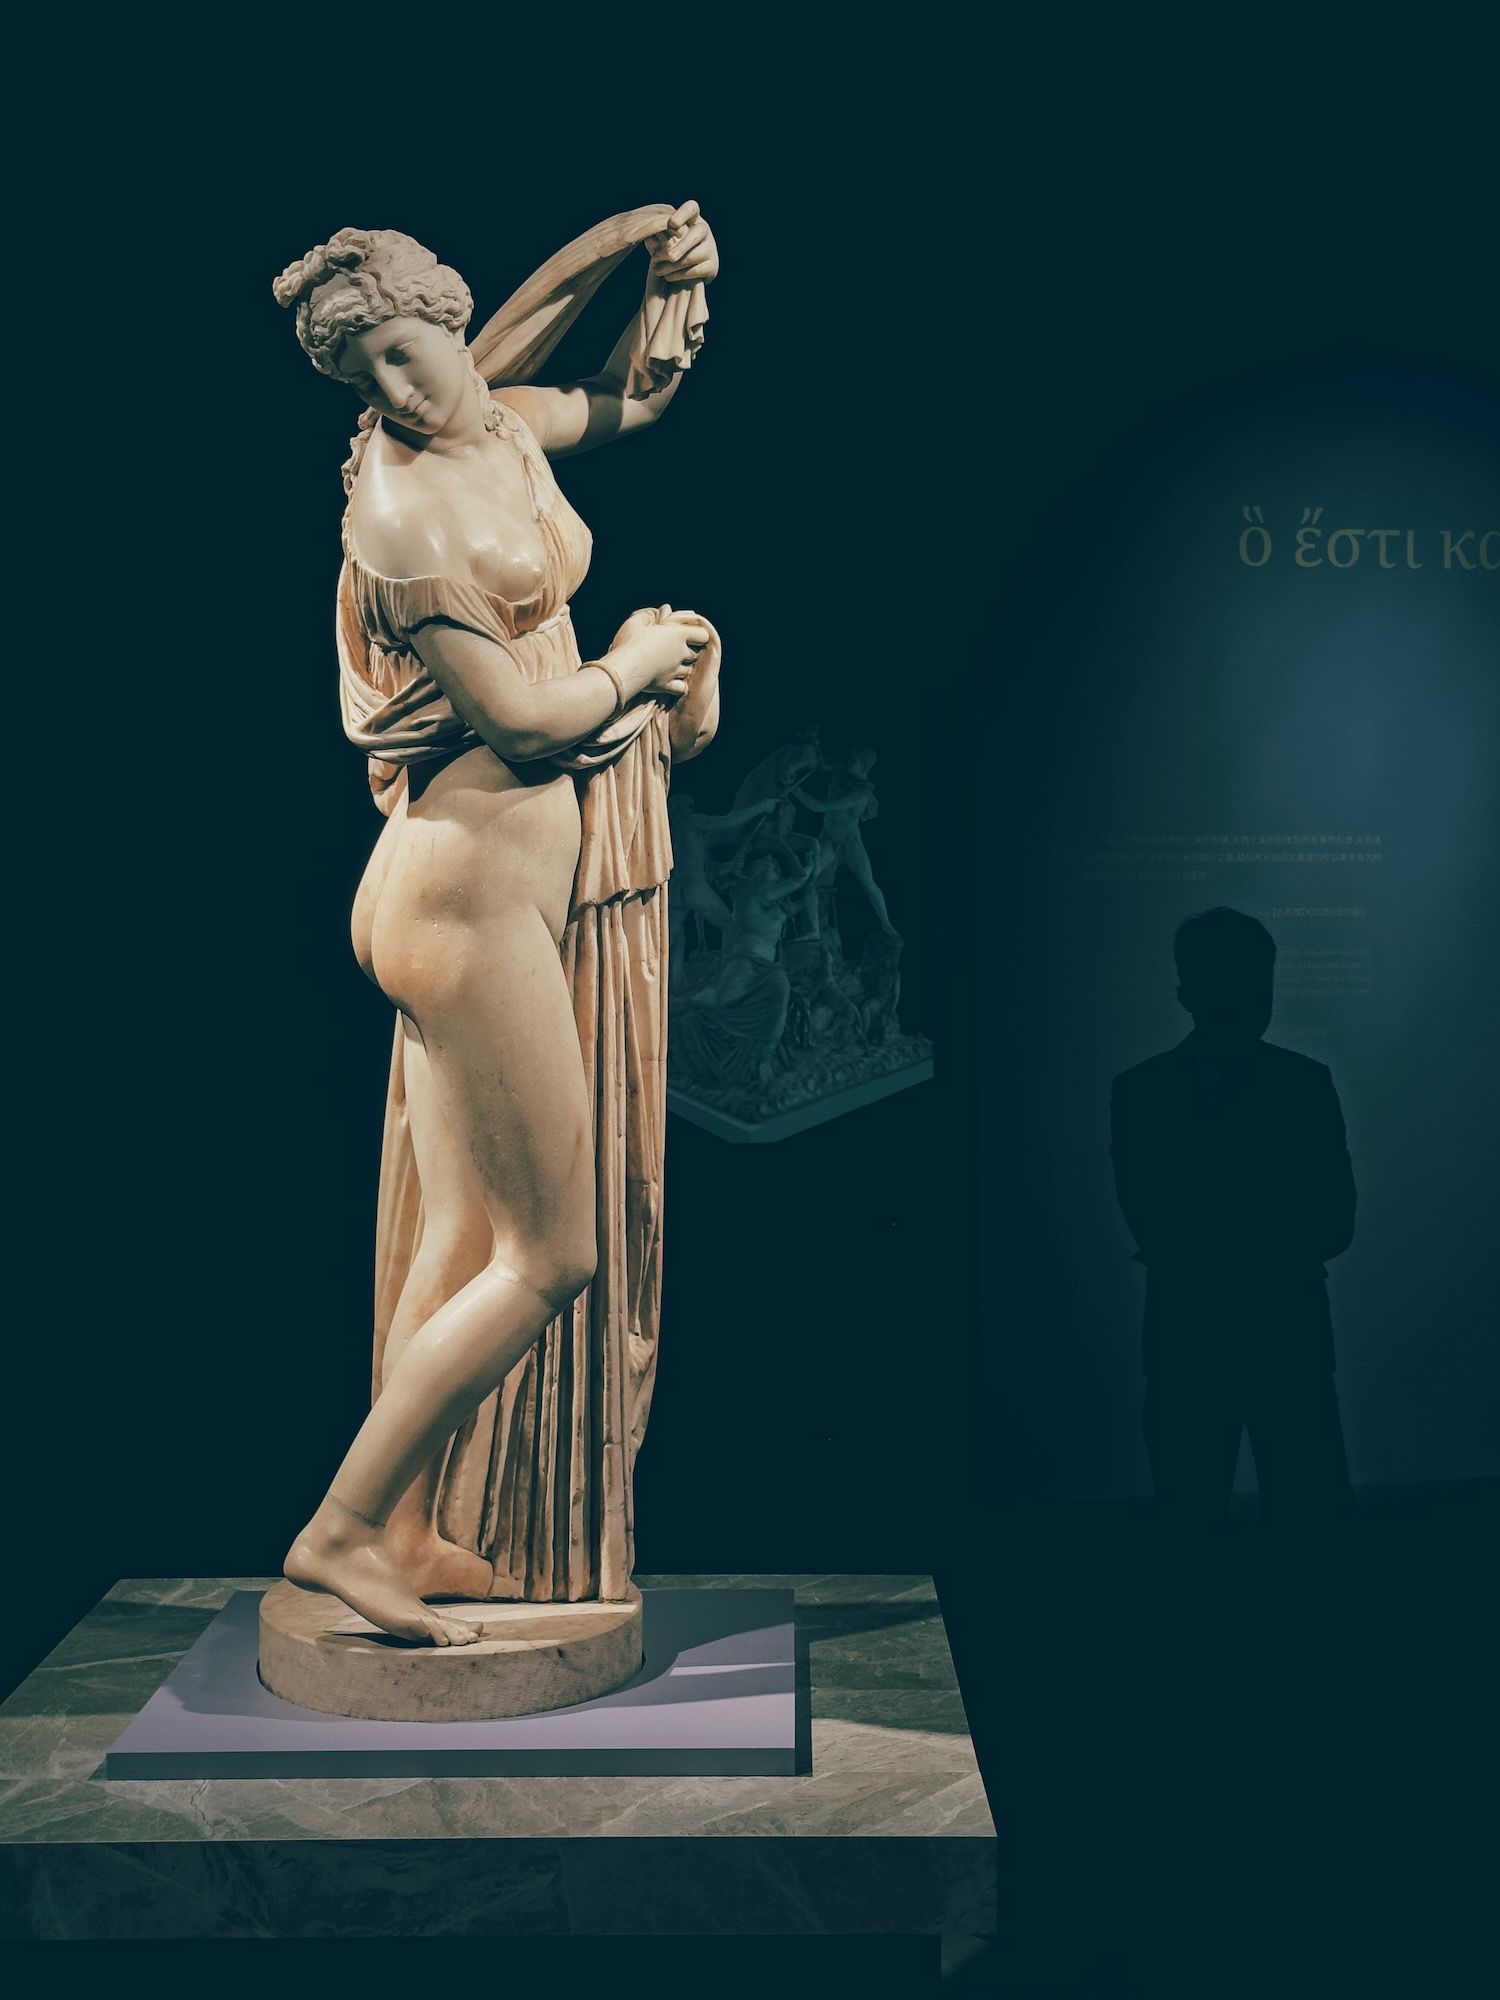 "The Light of Ancient Roman Civilization" Exhibition